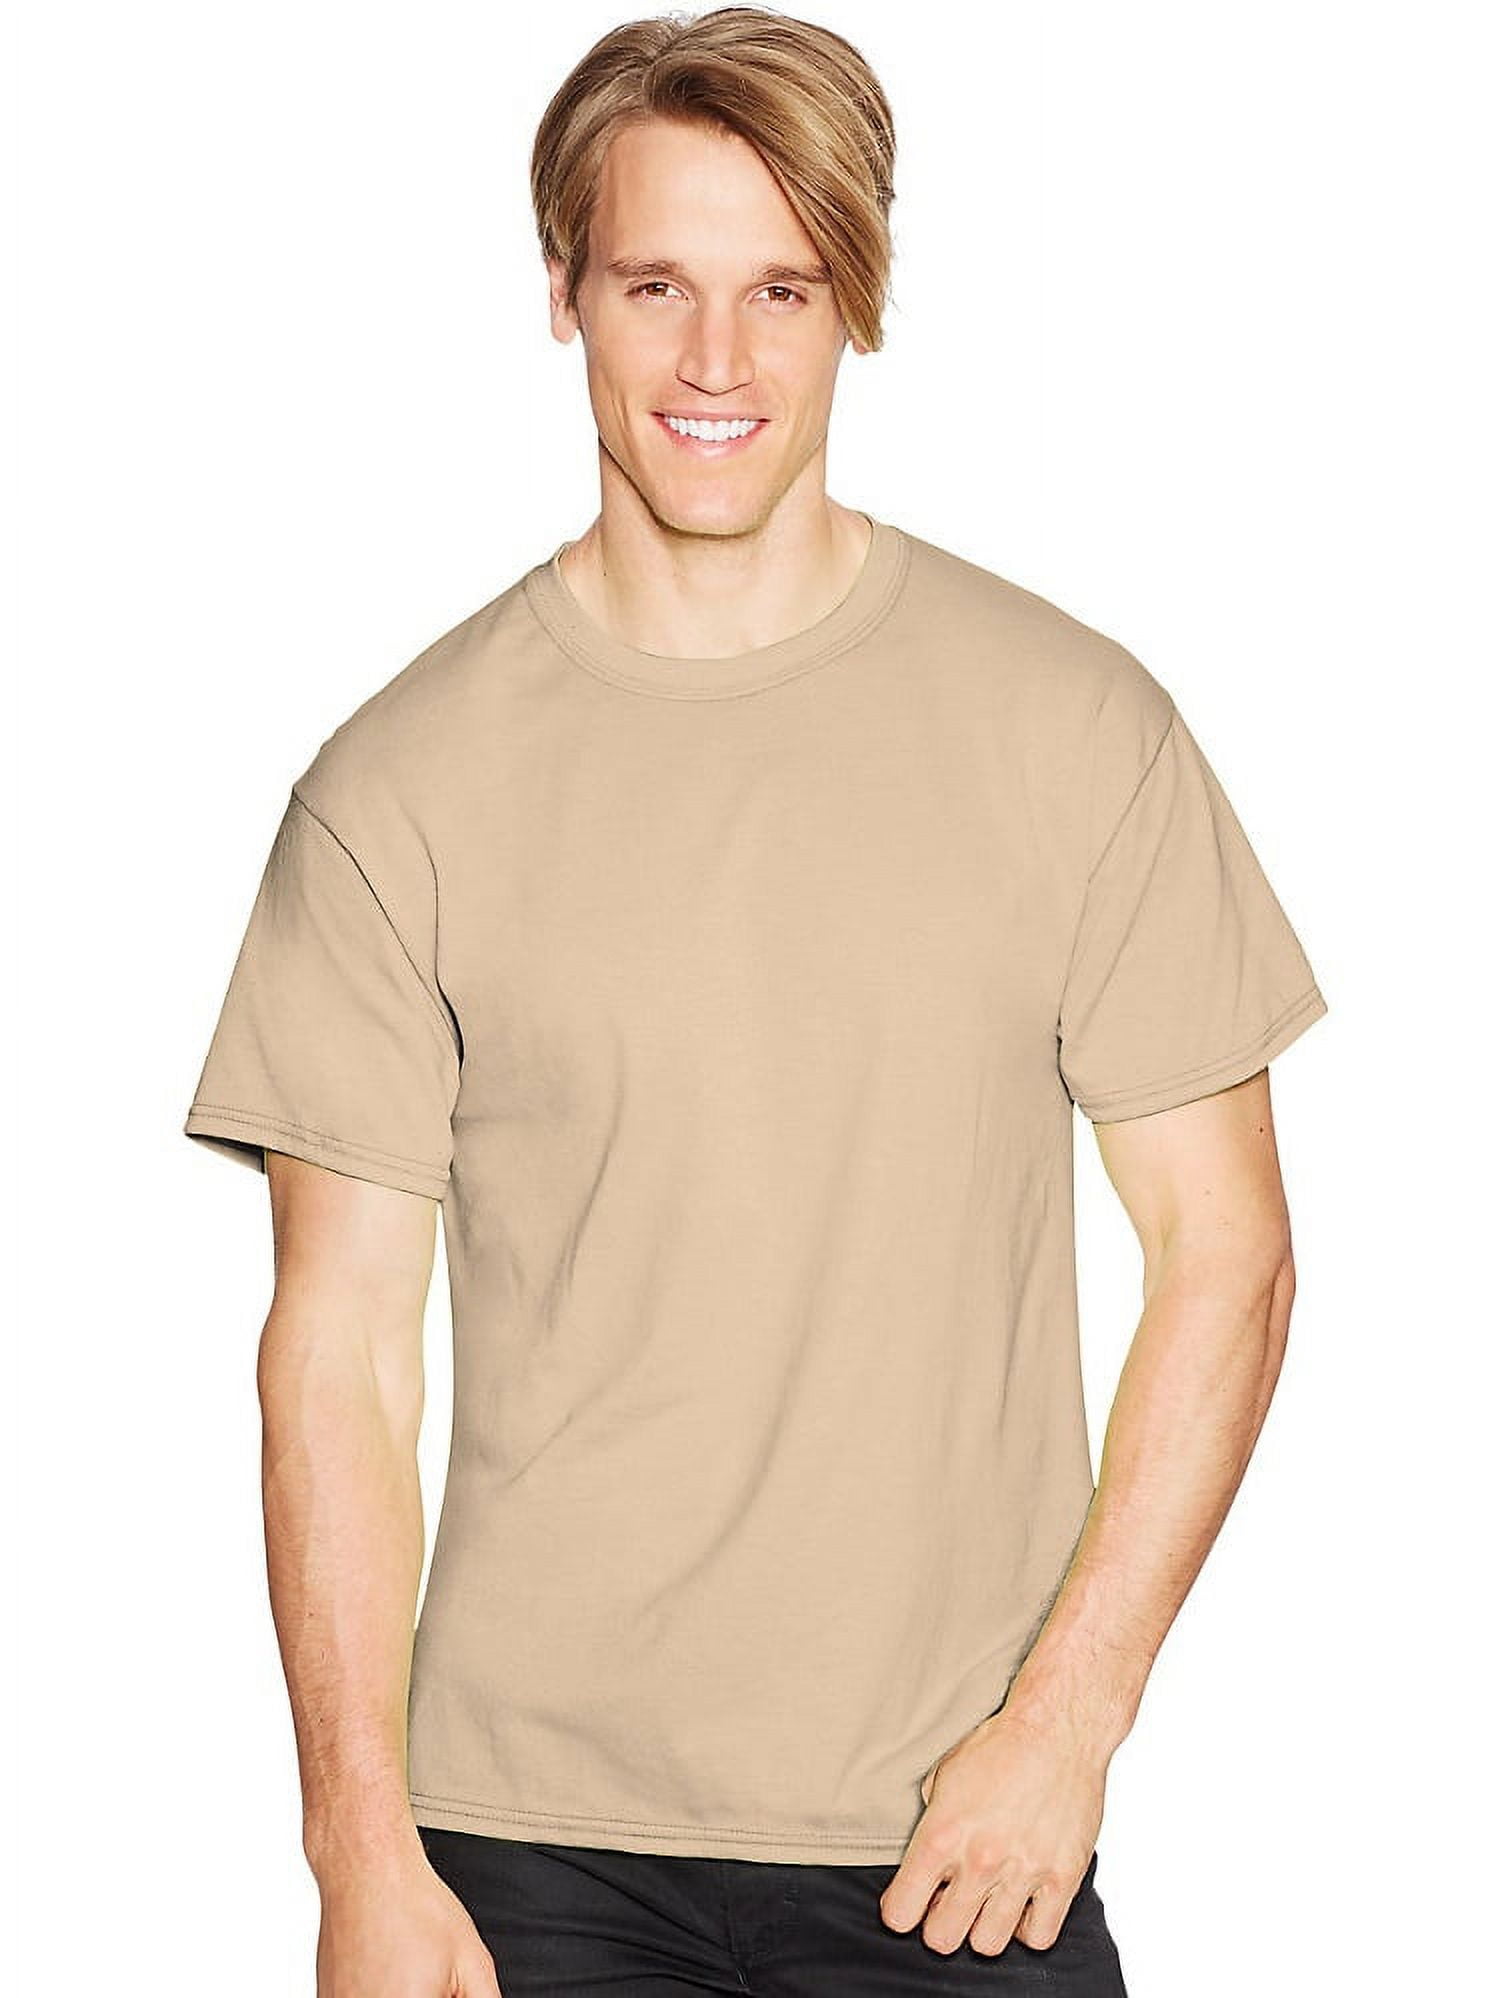 Hanes Comfortblend Ecosmart Crewneck Men's T-Shirt, Light Steel, 3Xl